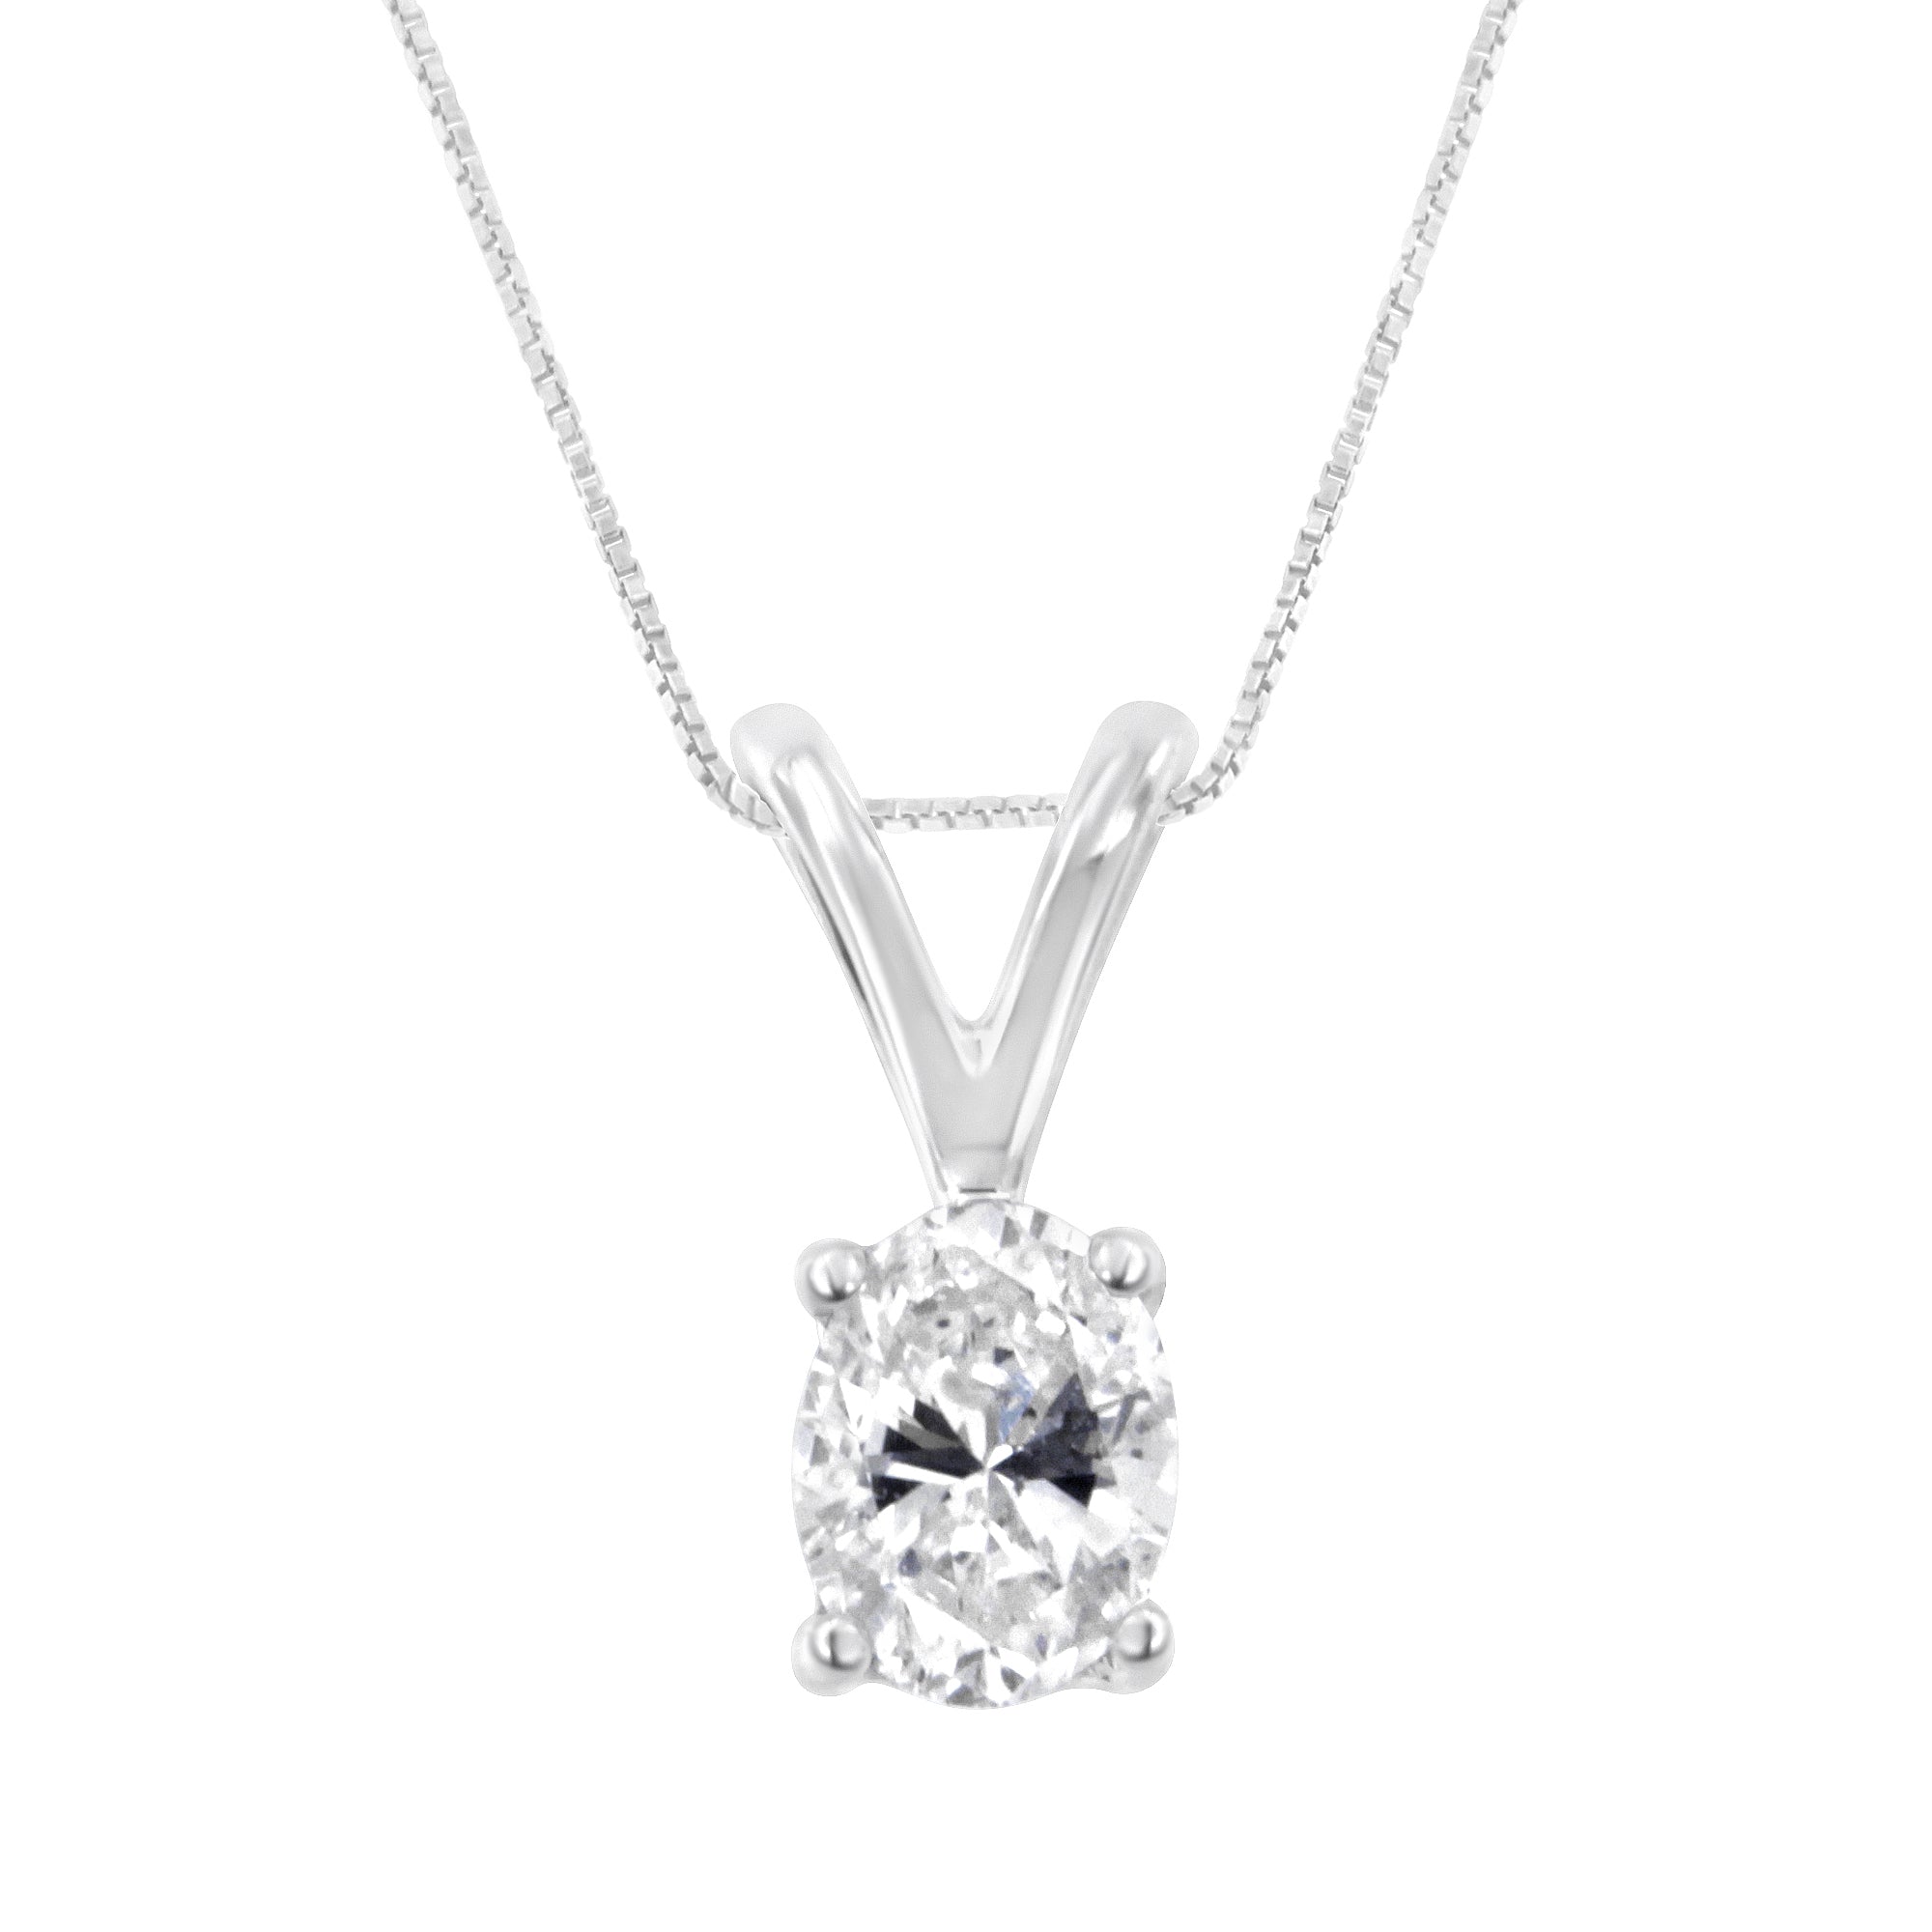 IGI Certified 10KT White Gold Diamond Oval Pendant Necklace (1/5 cttw, H-I Color, I1) - LinkagejewelrydesignLinkagejewelrydesign